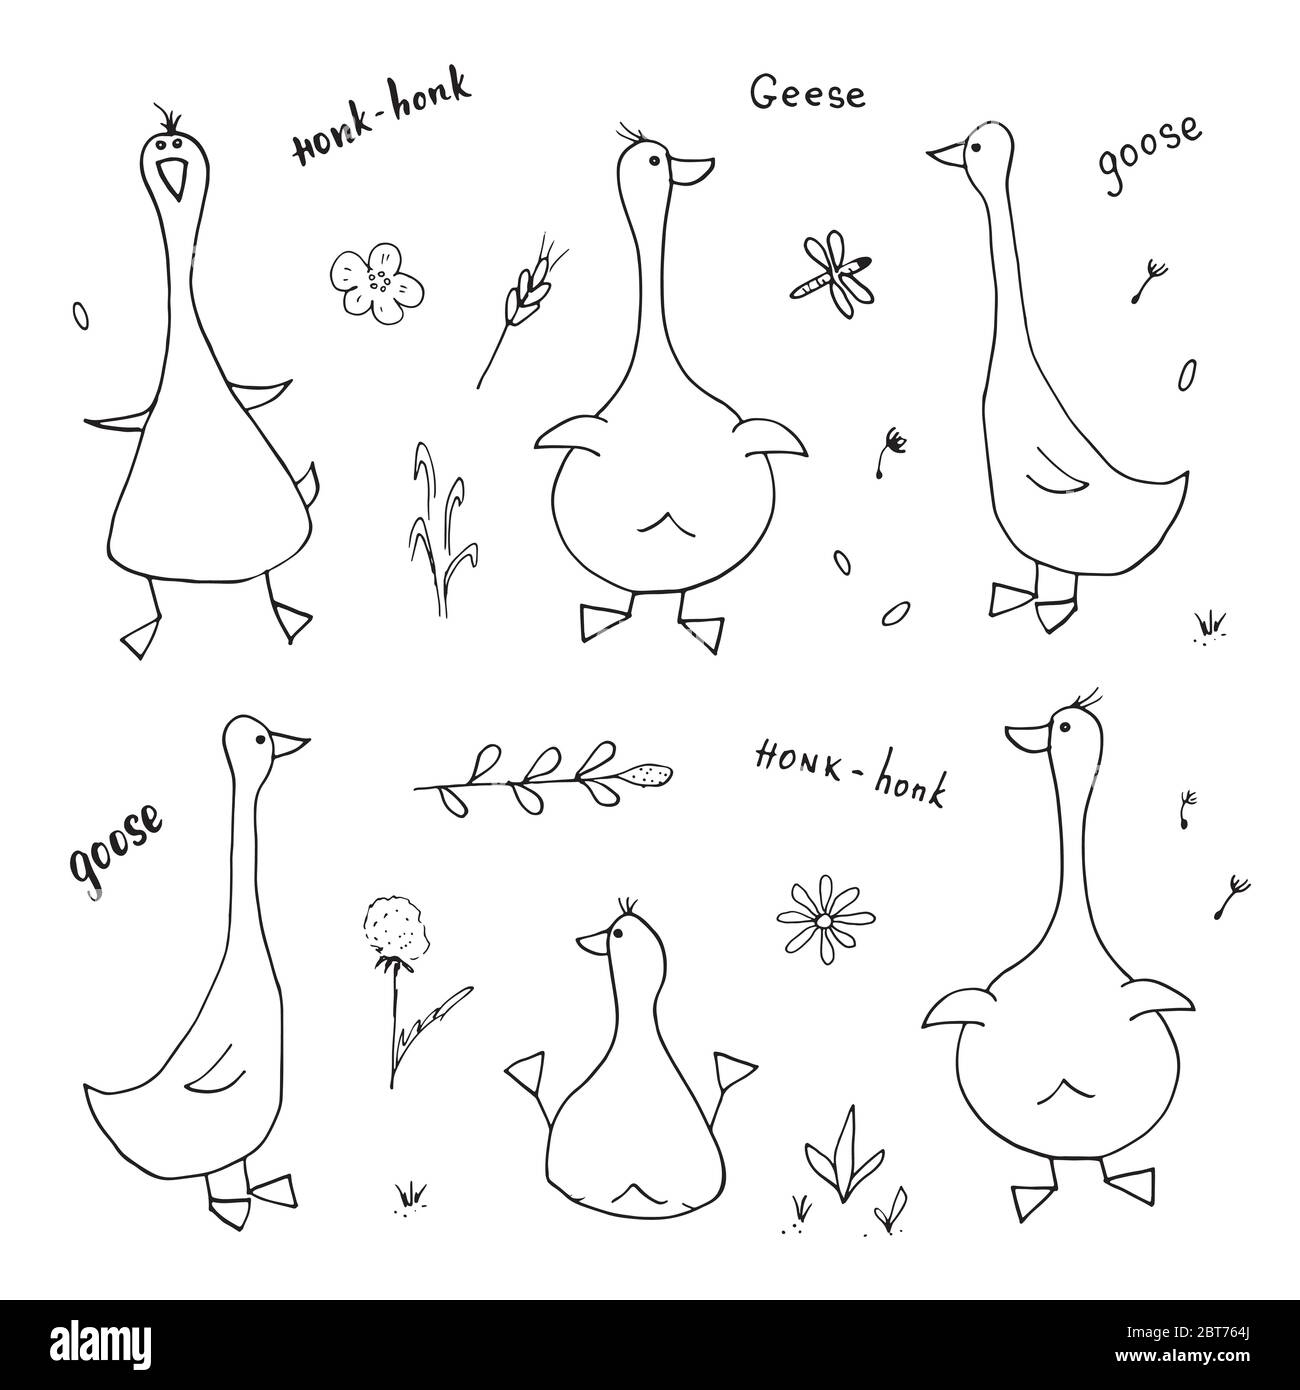 Goose doodles set cute geese sketch hand drawn Vector Image